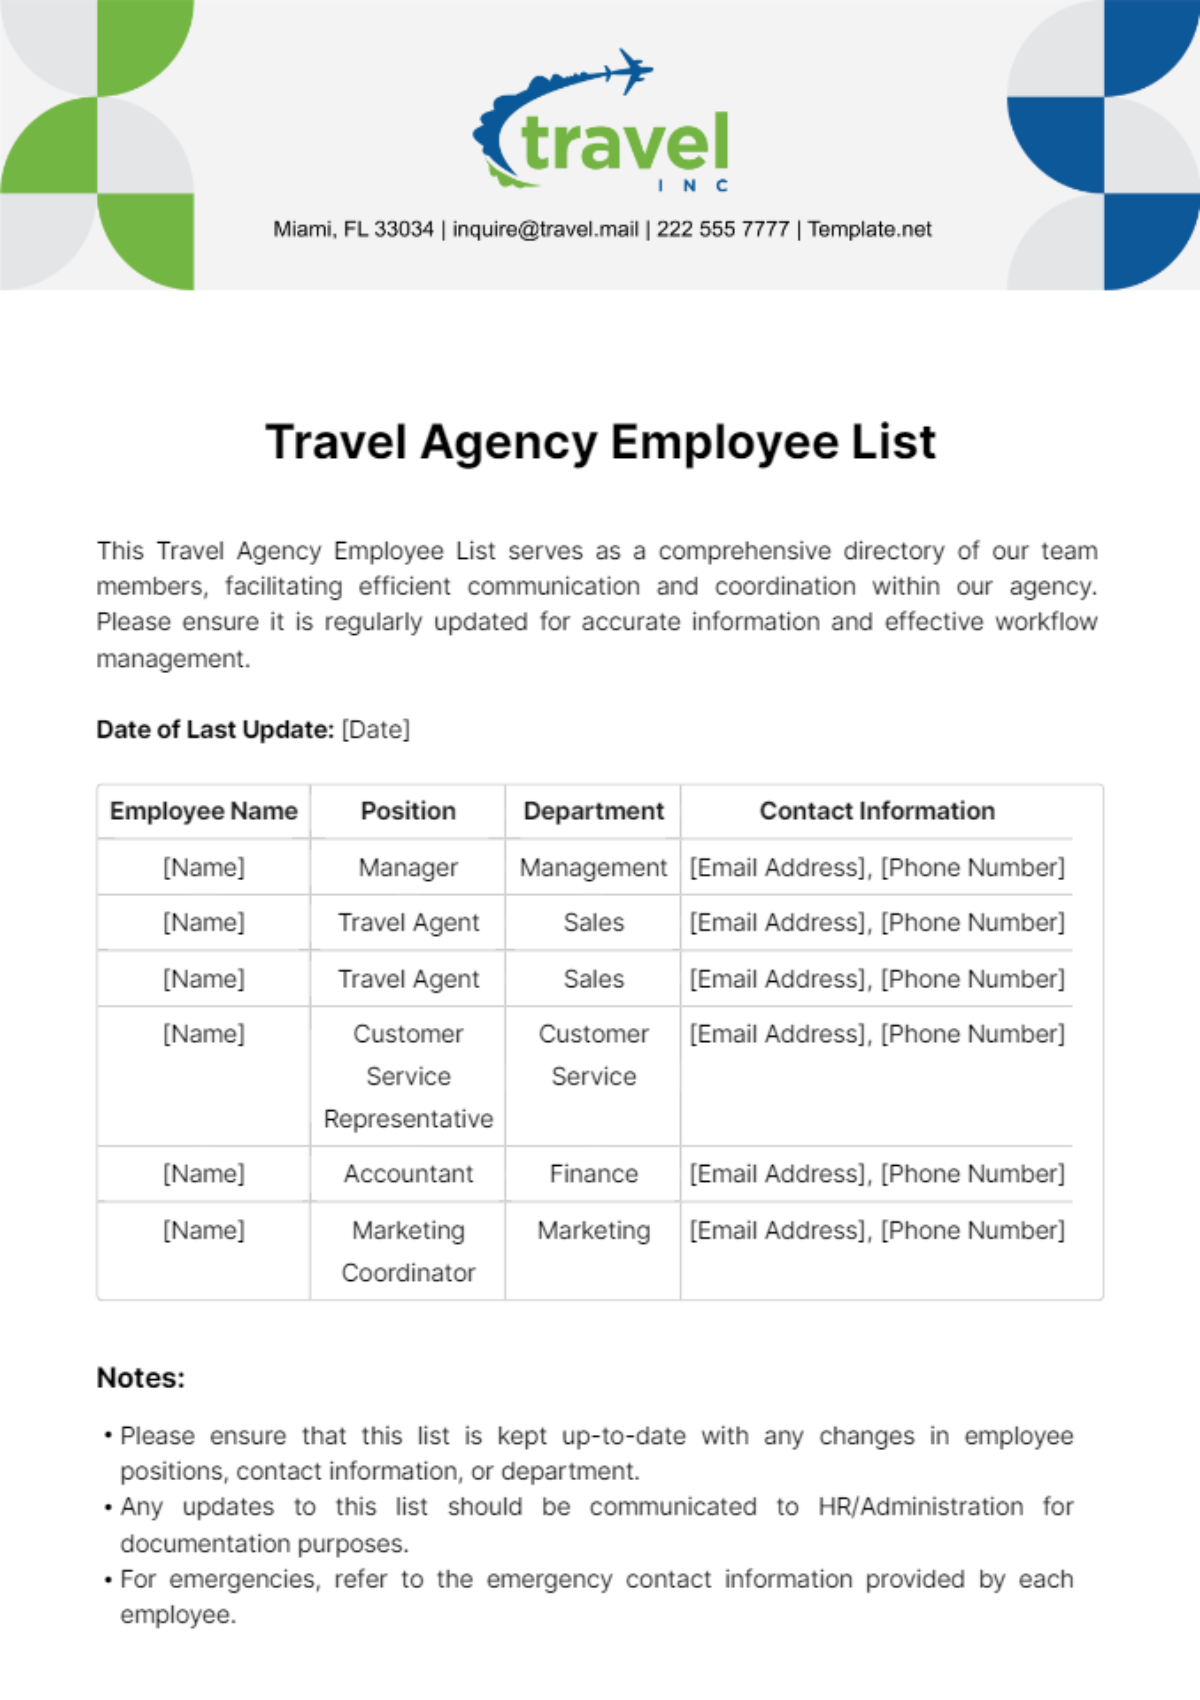 Travel Agency Employee List Template